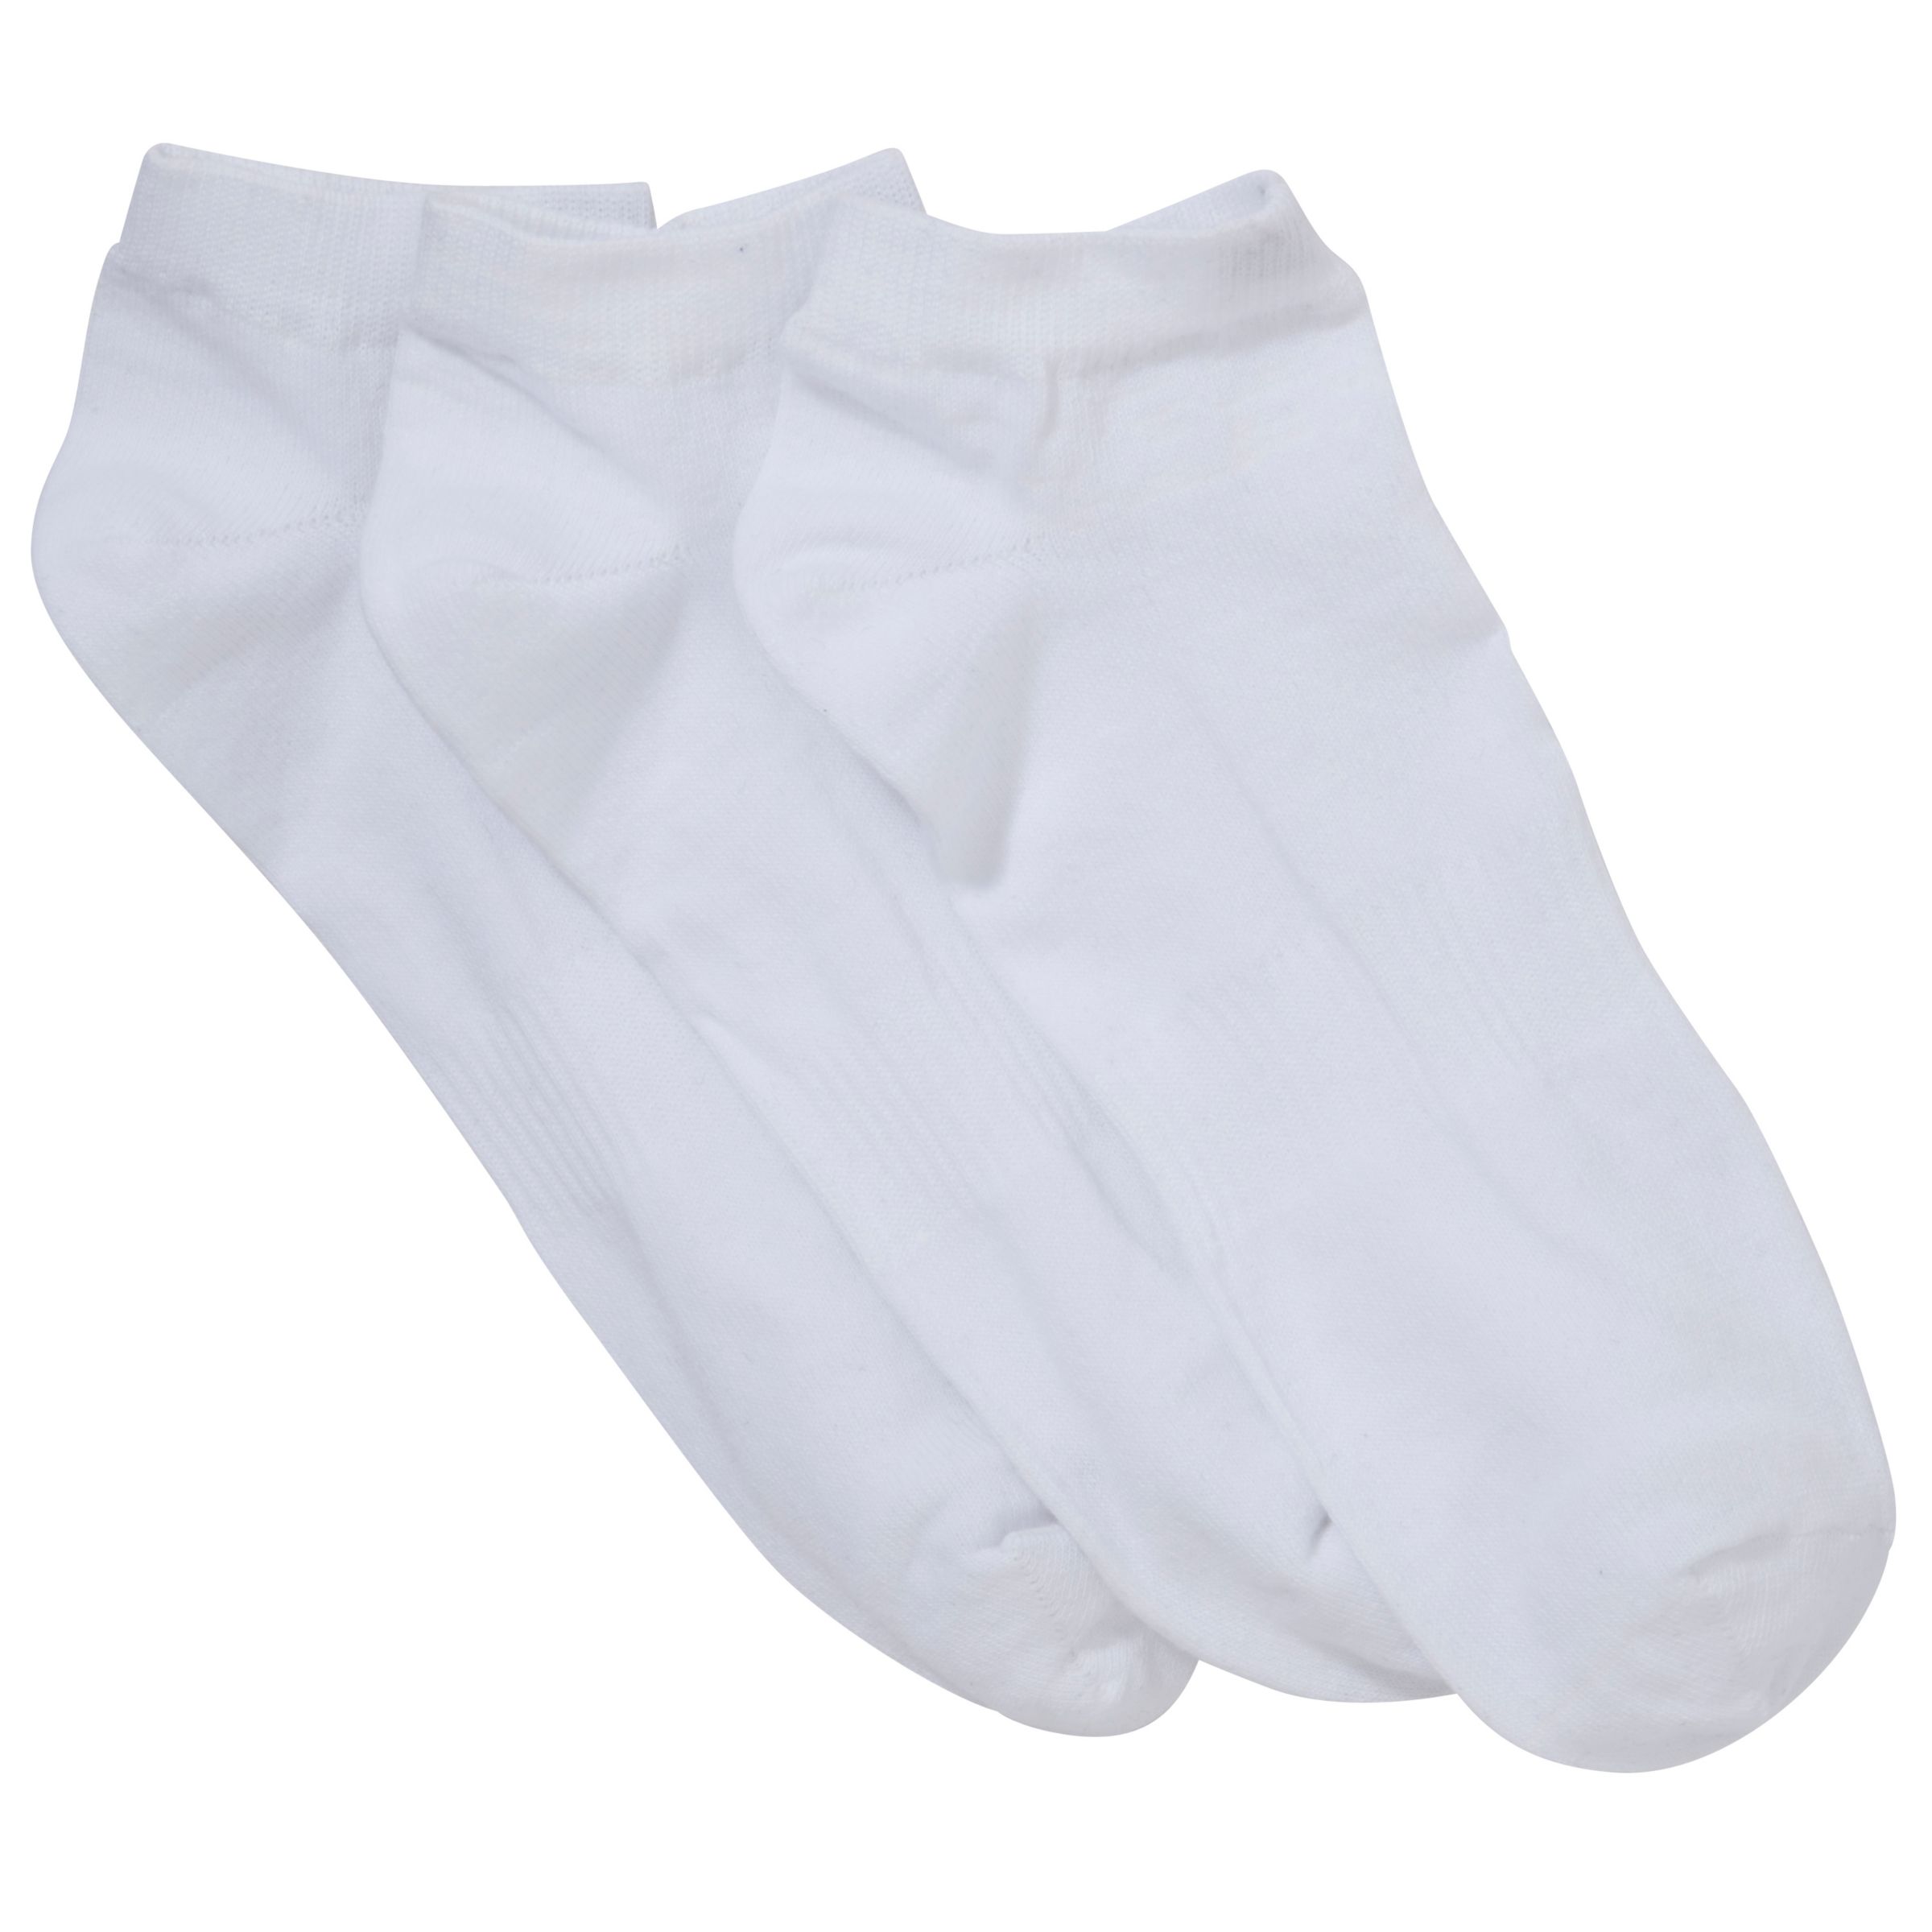 John Lewis & Partners Cotton Trainer Socks, Pack of 3, White